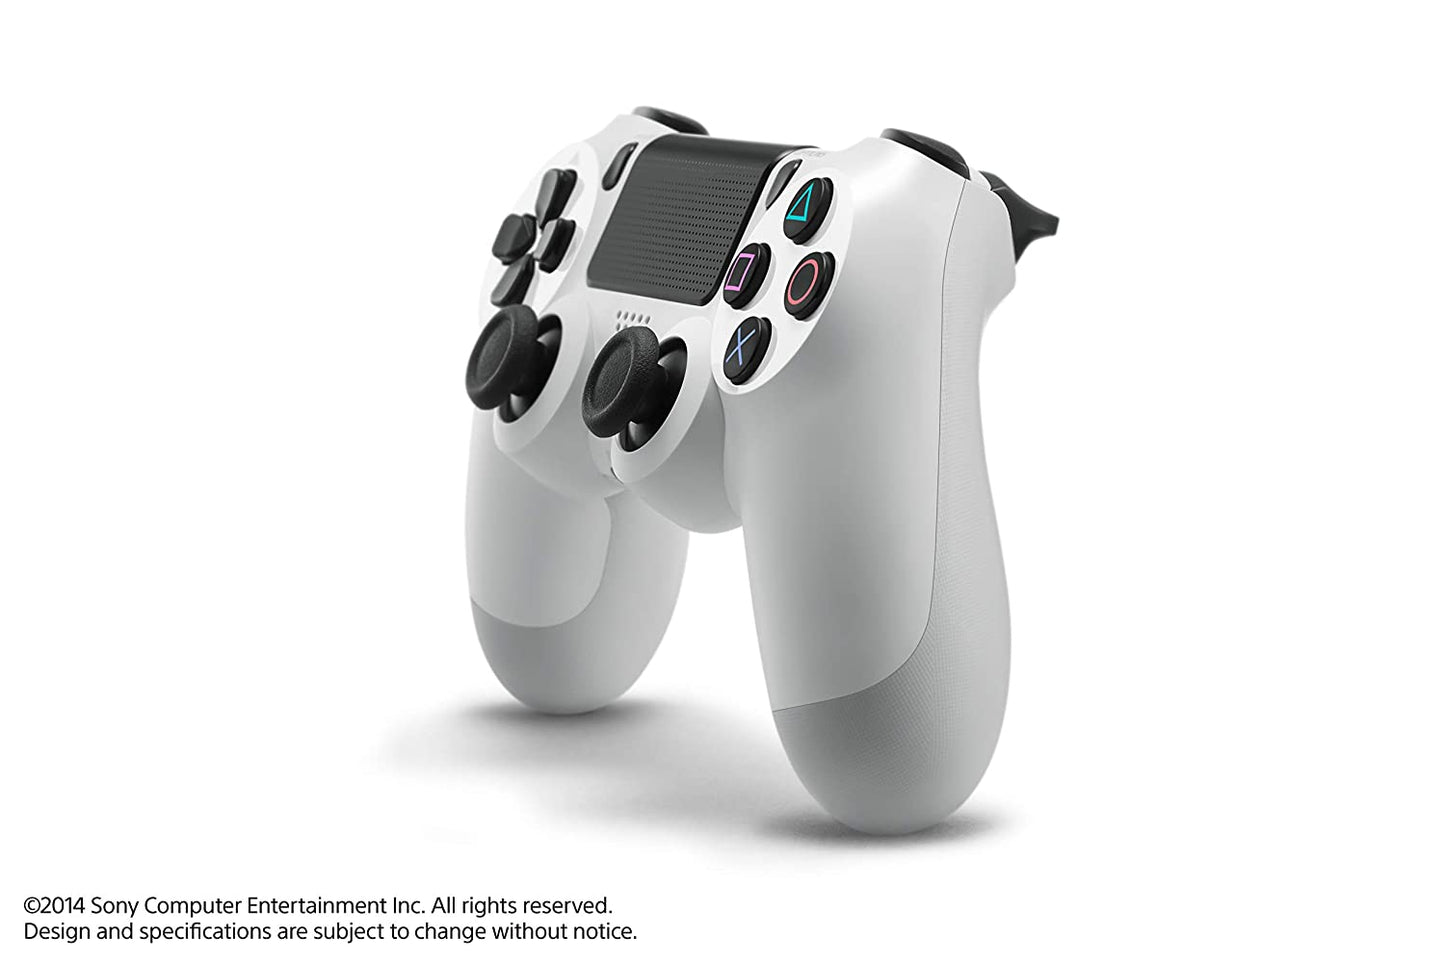 DualShock 4 Wireless Controller for PS4 - Glacier White ( Original )